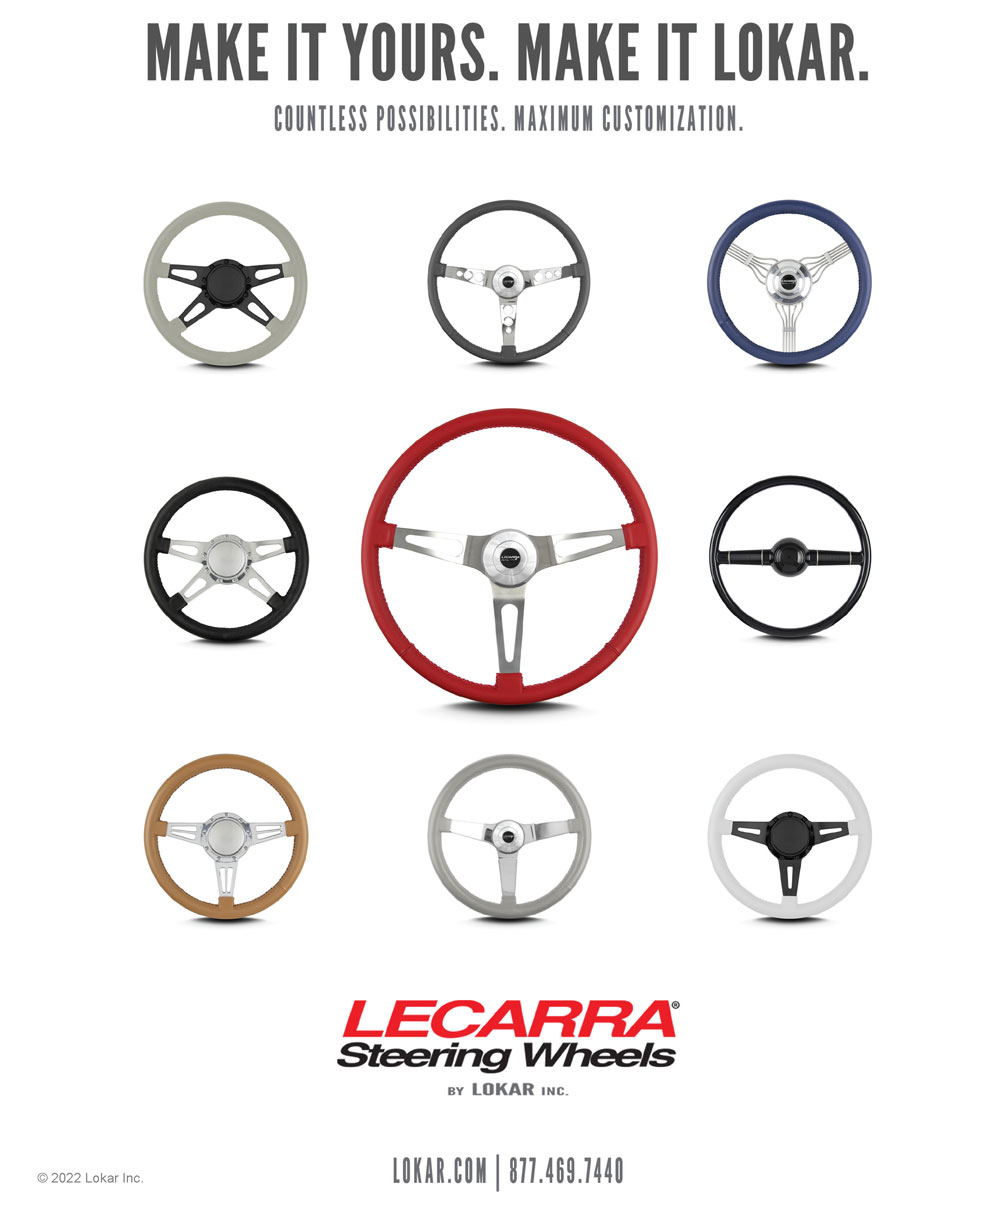 Lecarra Steering Wheels by Lokar Inc. Advertisement